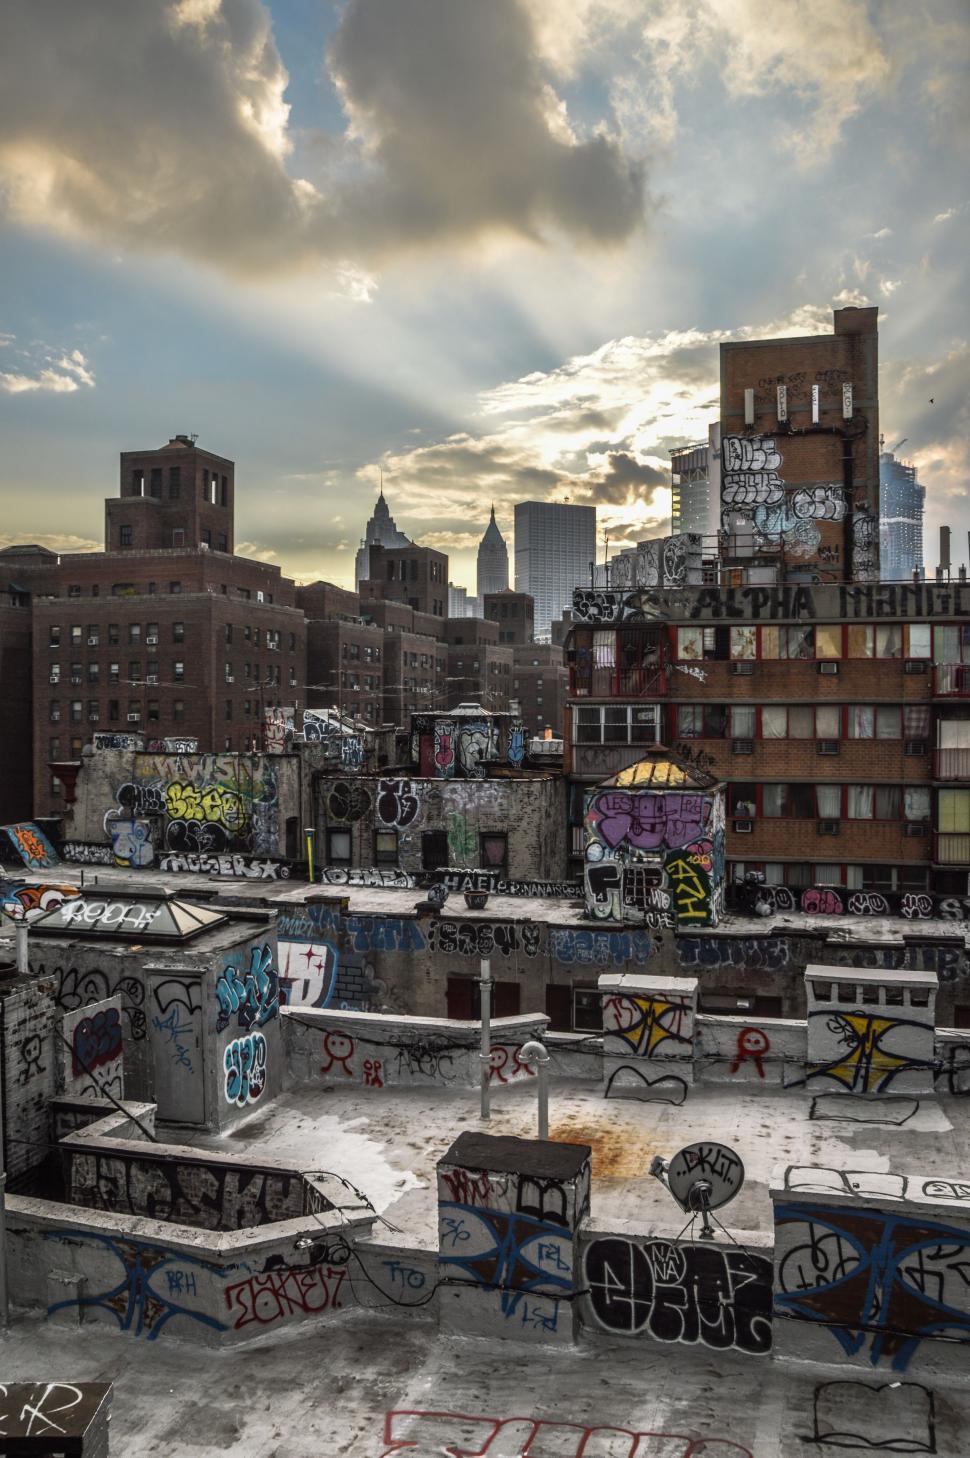 Free Image of Urban Cityscape With Graffiti 